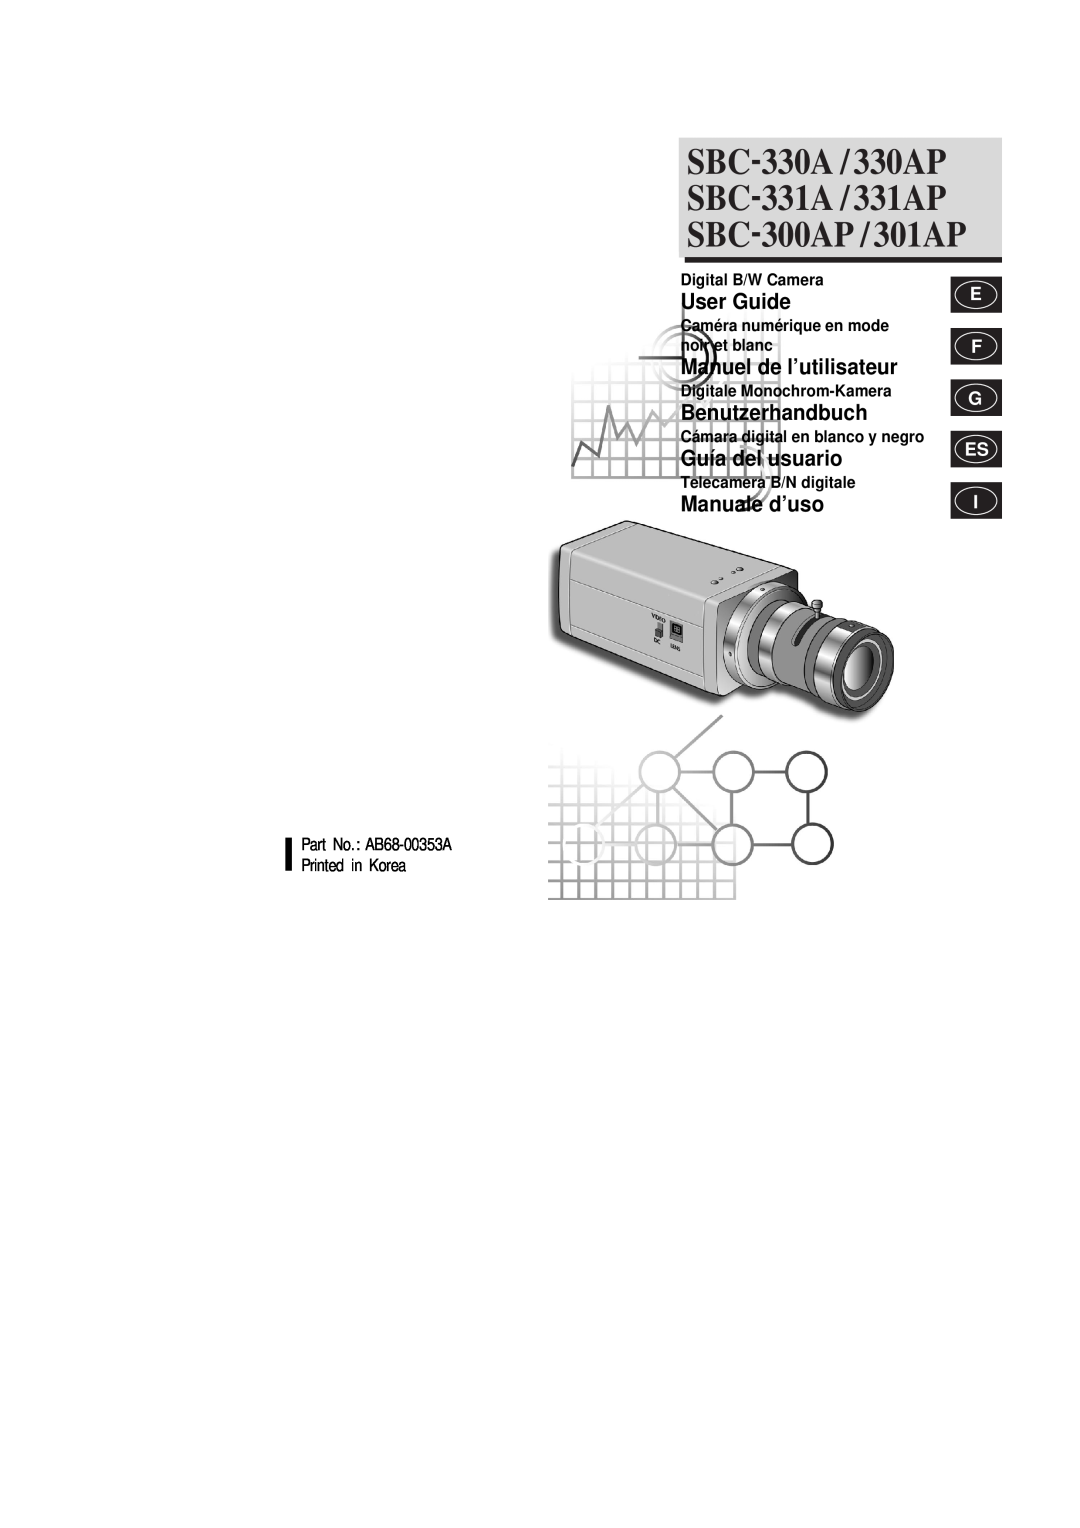 Samsung SBC-330AP, SBC-331AP manual User Guide, Manuel de l’utilisateur, Benutzerhandbuch, Guía del usuario, Manuale d’uso 